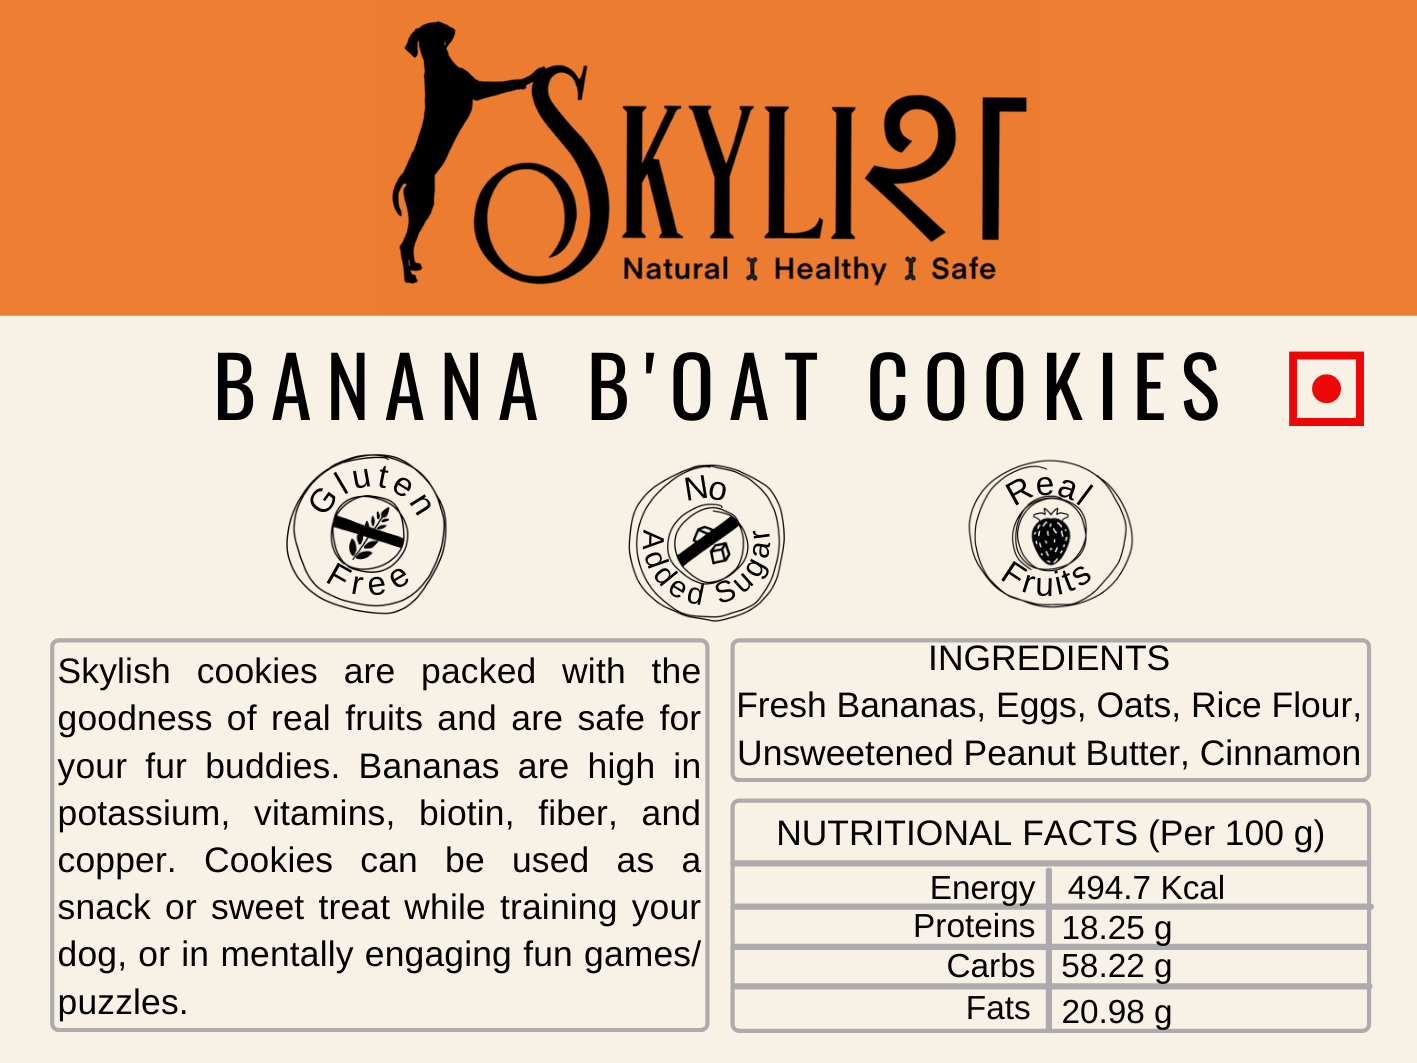 Banana Boat Cookies